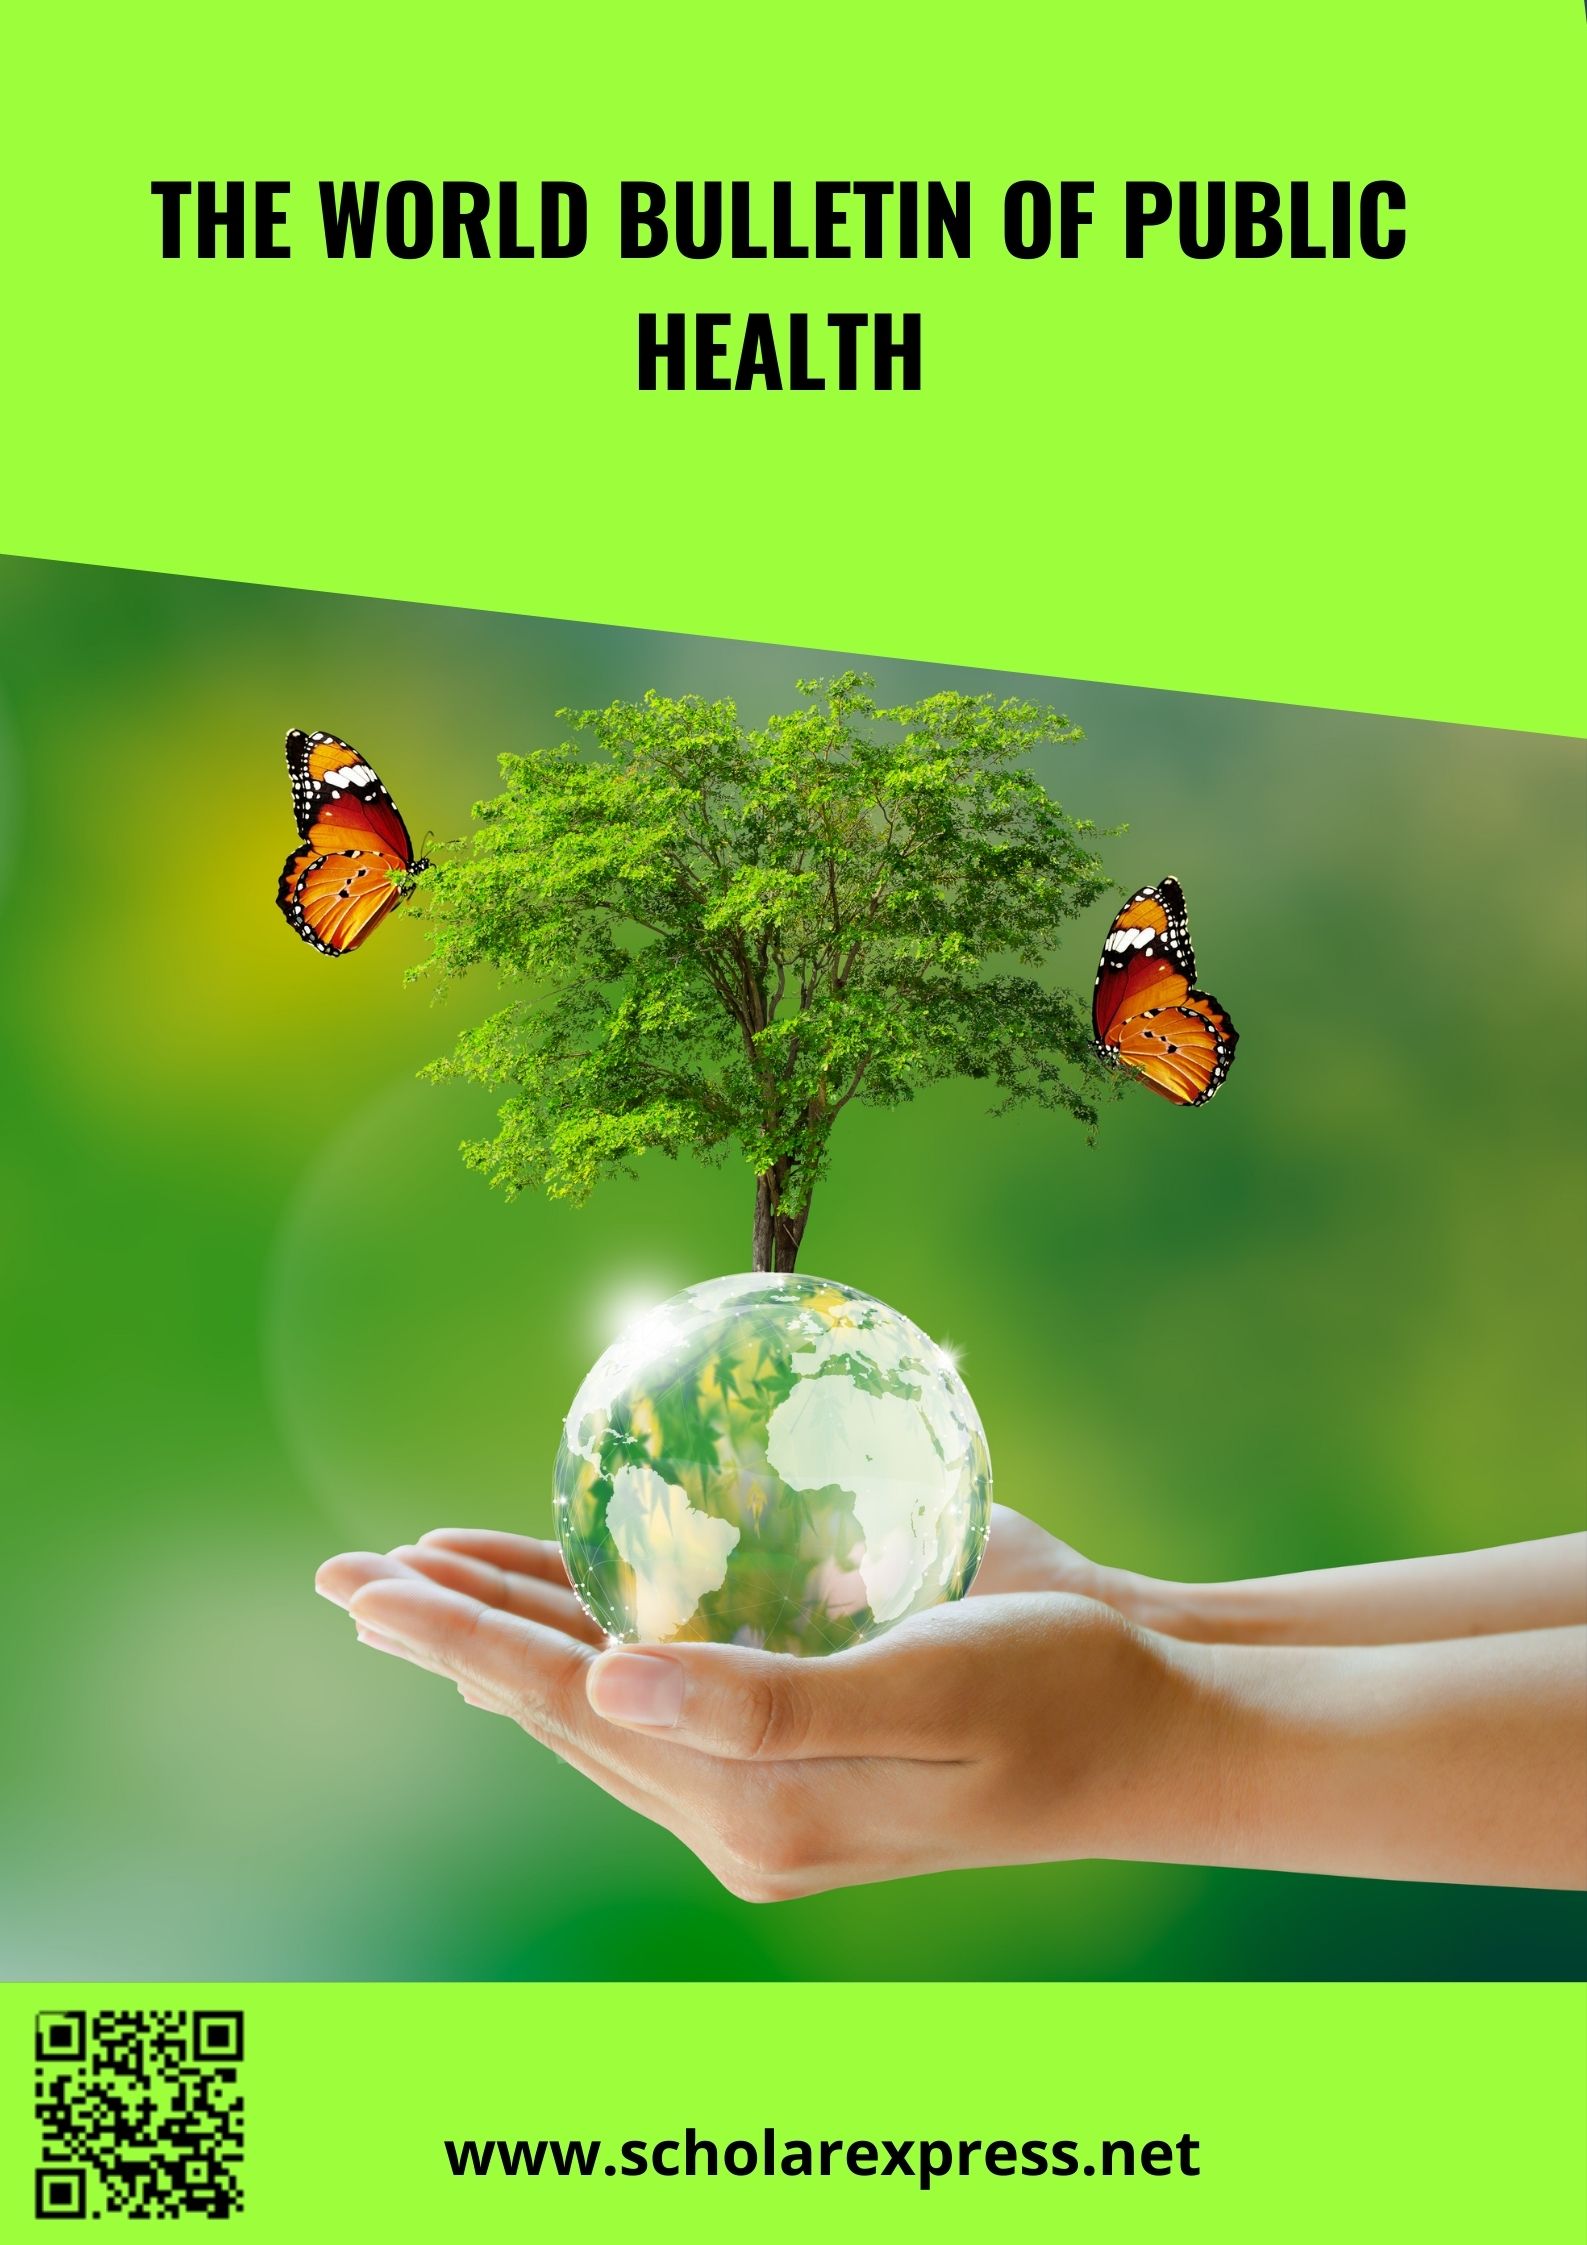 The World Bulletin of Public Health